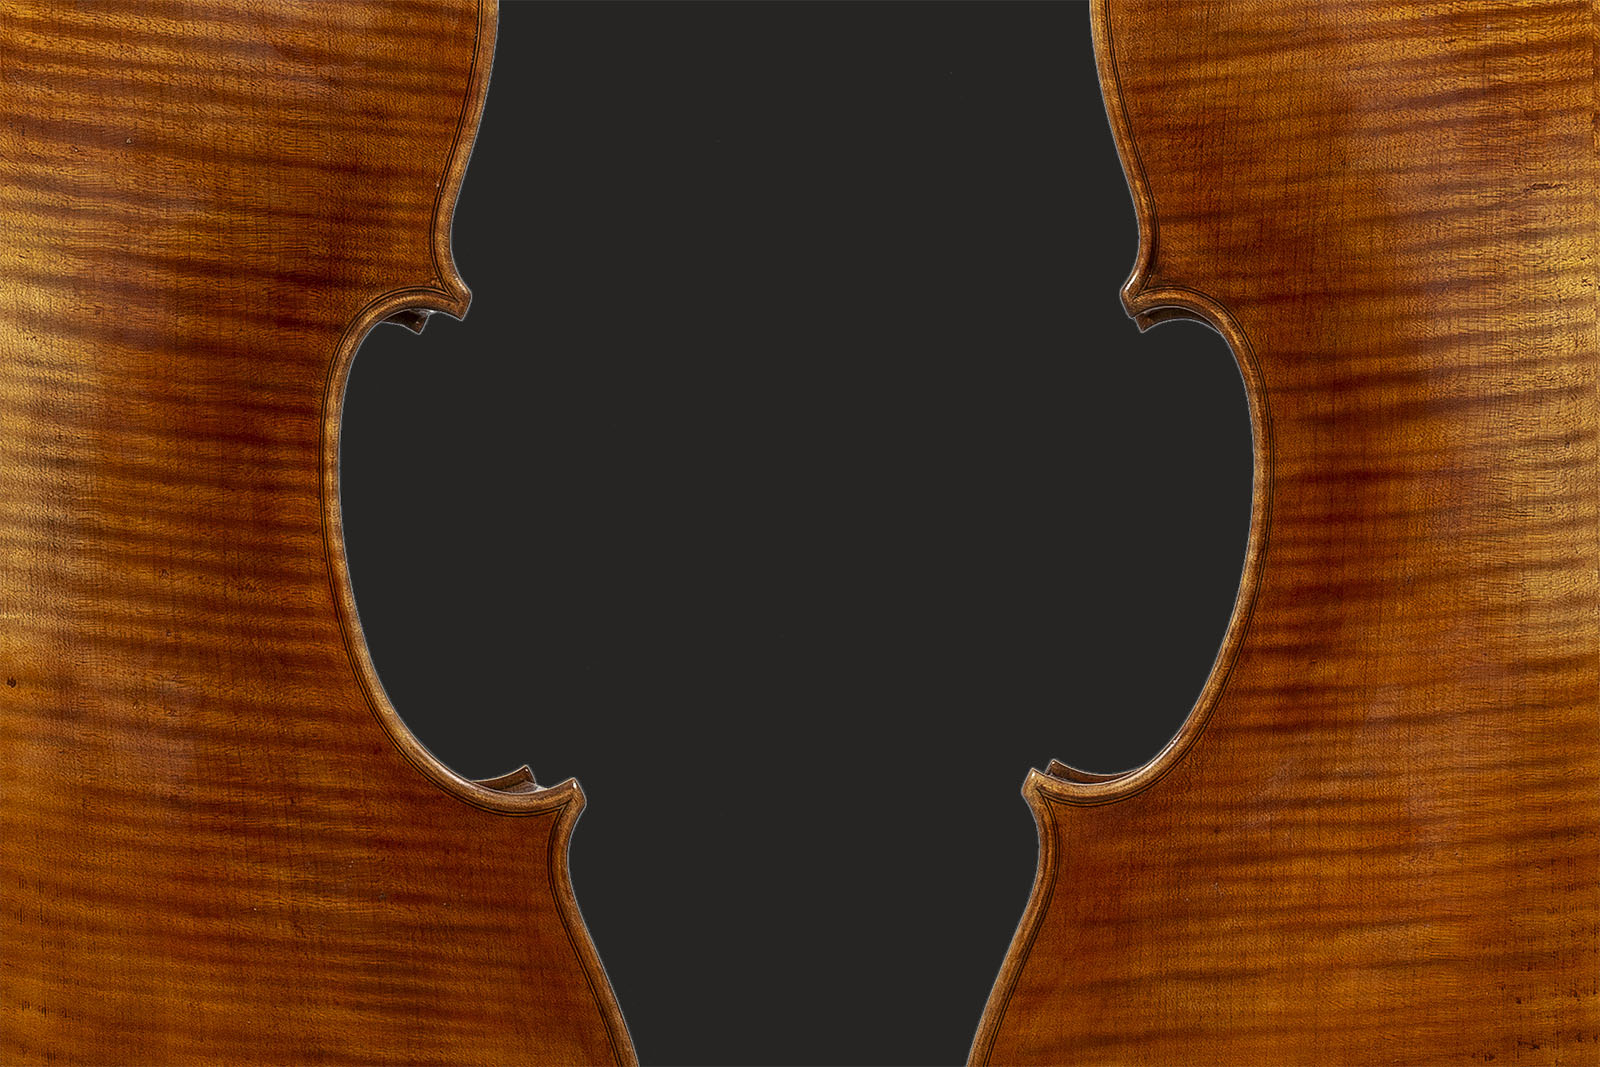 Antonio Stradivari Cremona 1700 “Cristiani“ “Aeos“ - Image 4